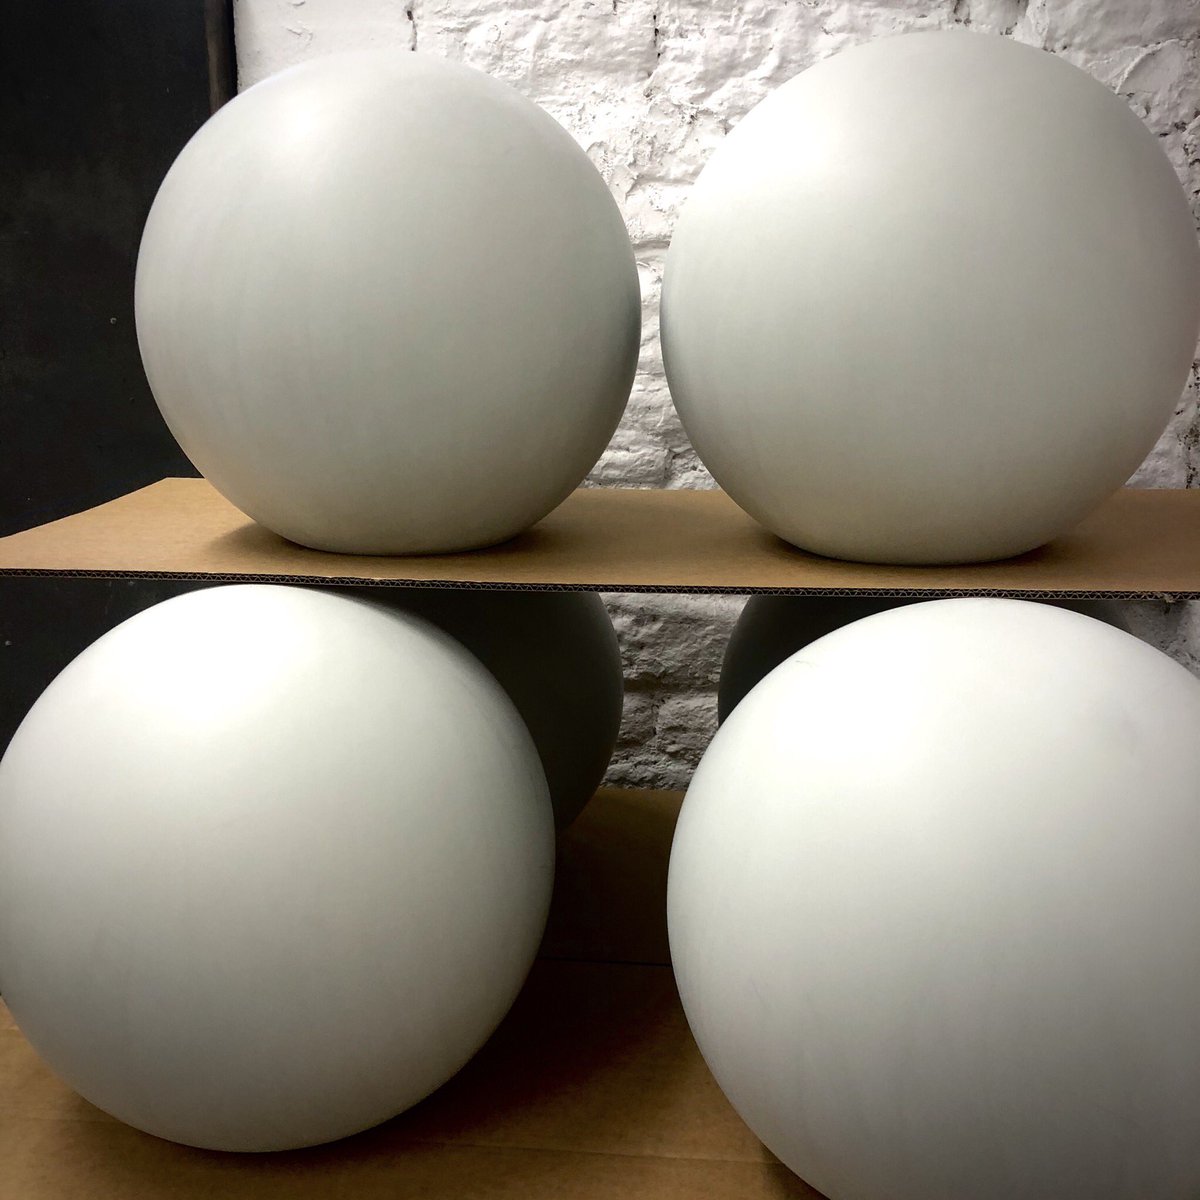 First spheres primed and flattened #spheresofinfluencewgc #sculpture #spheres @GreatPlace_WE @HeritageFundUK @BarnsleyMuseums @Beam_ArtsUK @ace_thenorth #wegreatart @nationaltrust @NT_TheNorth